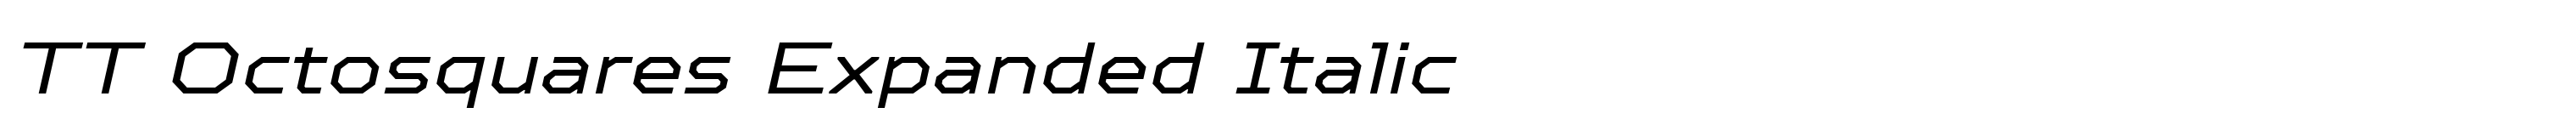 TT Octosquares Expanded Italic